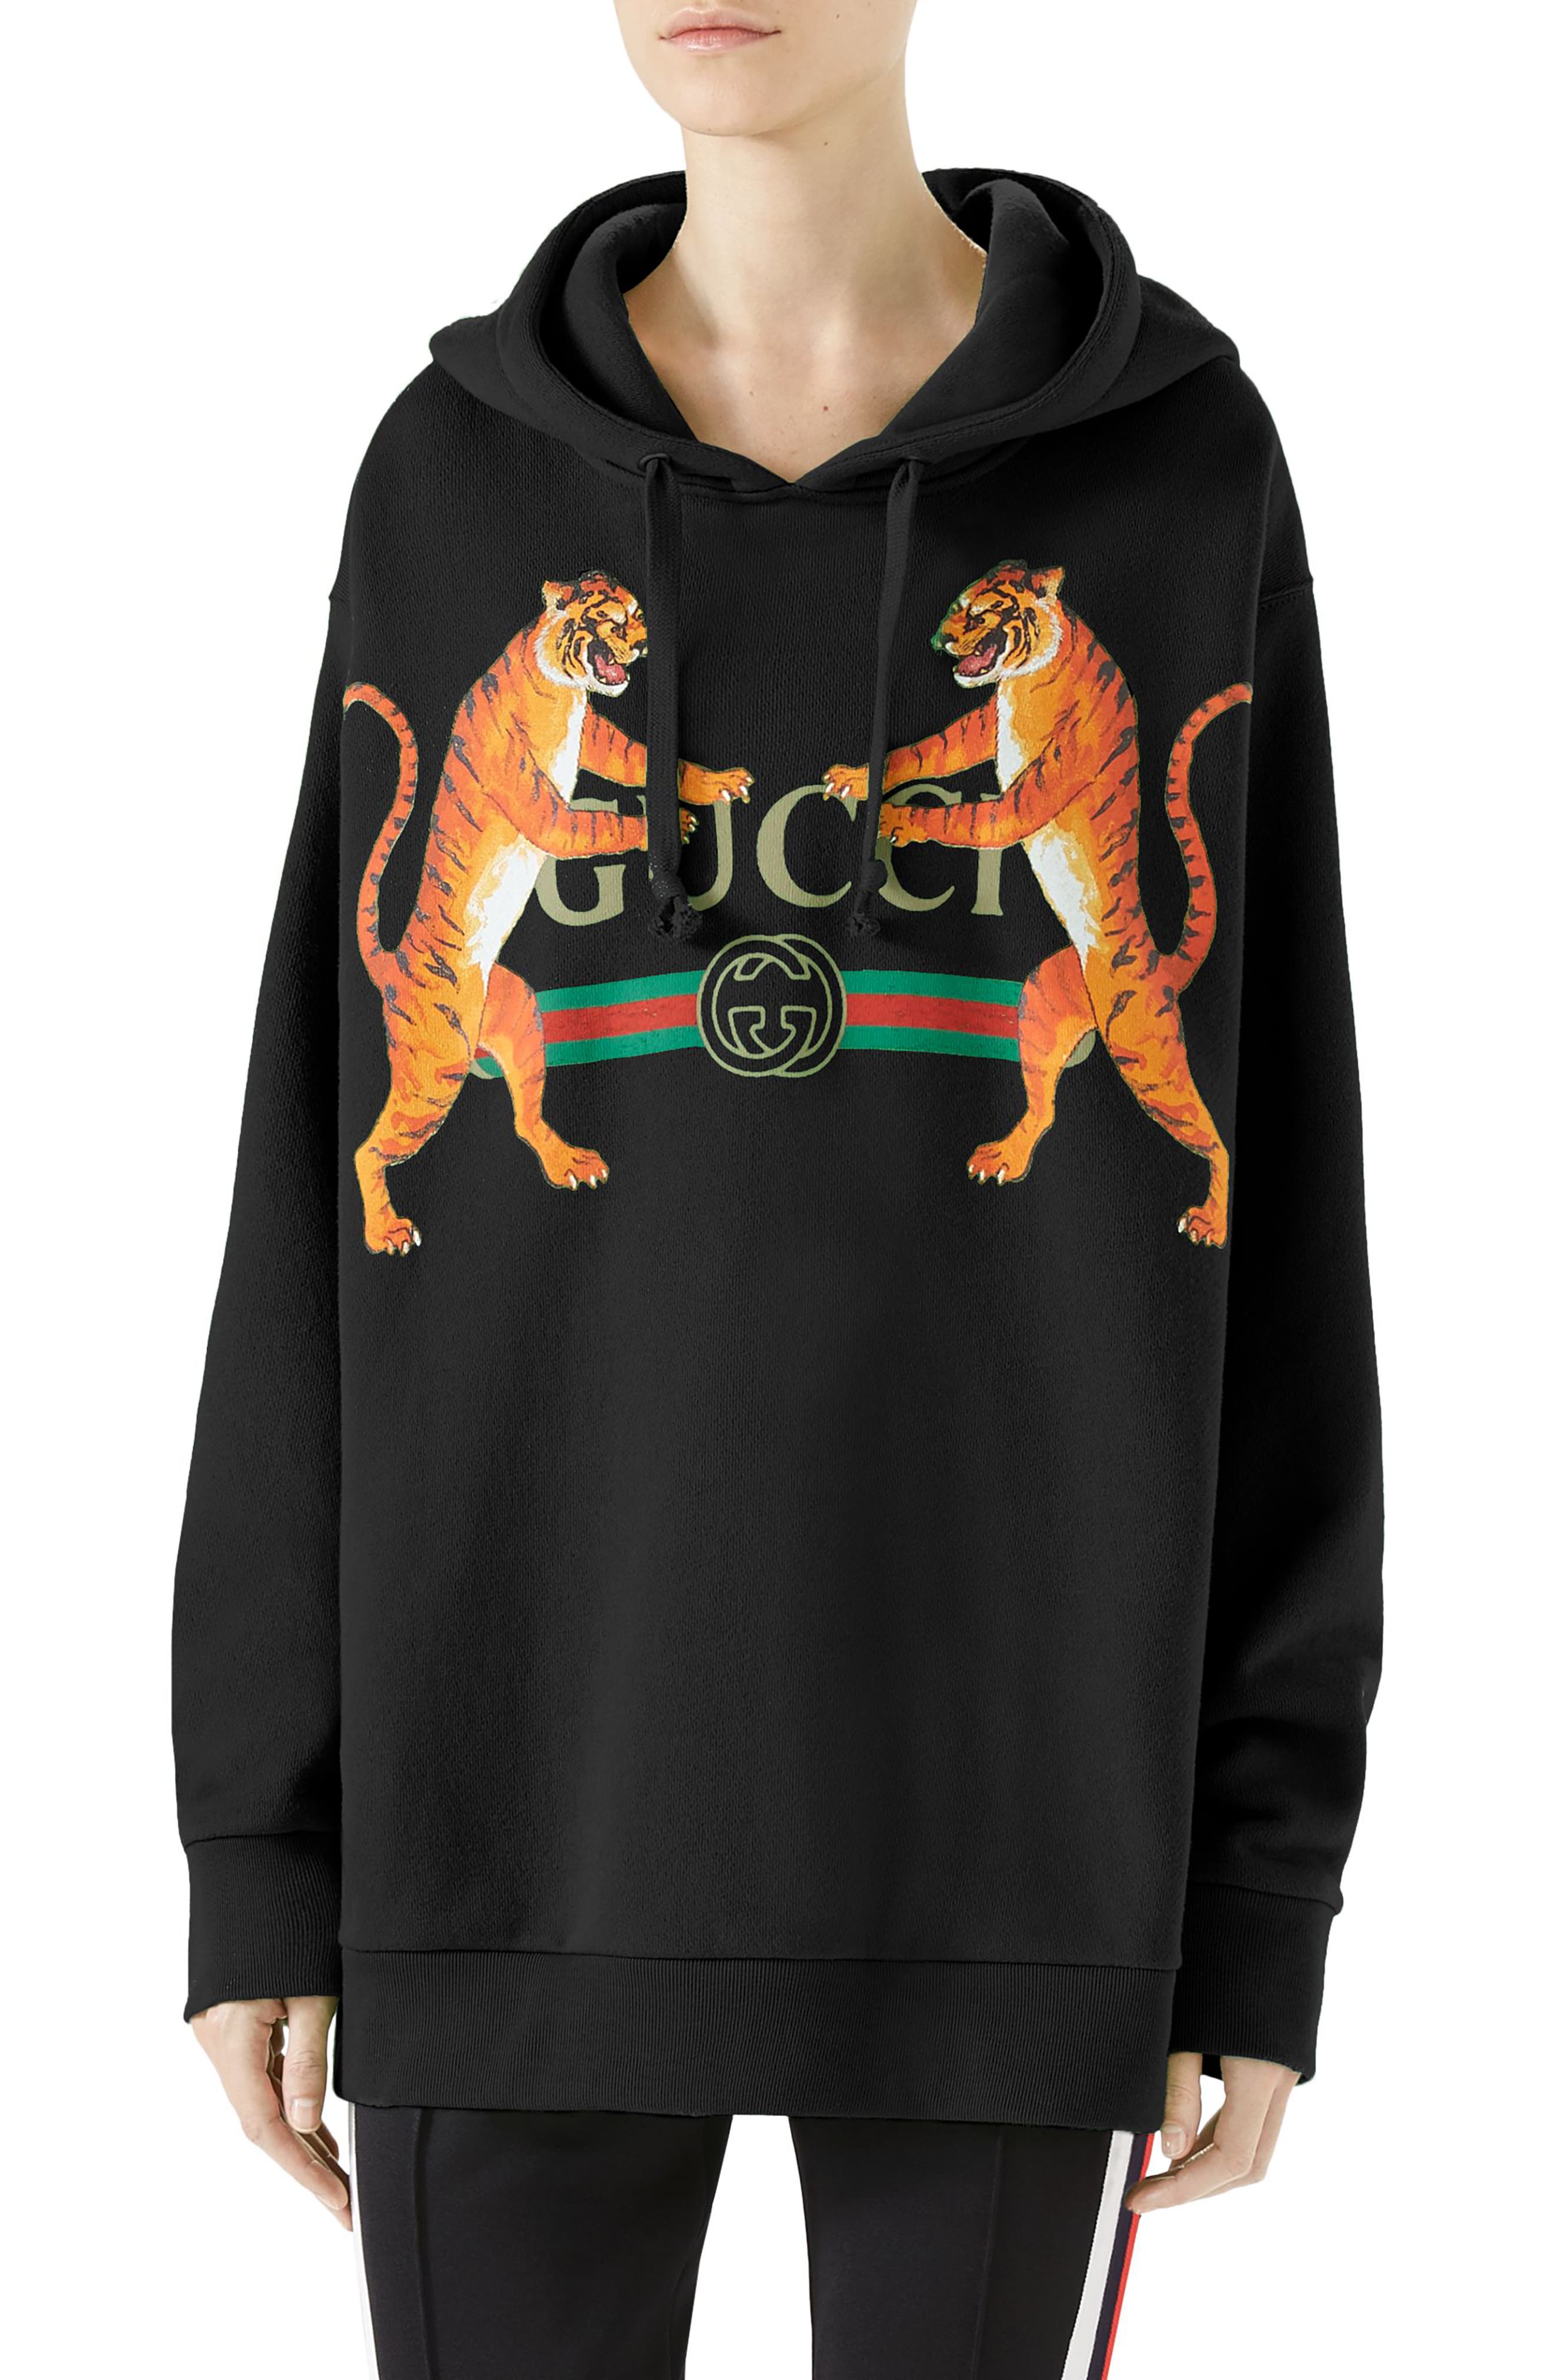 hoodie gucci tiger